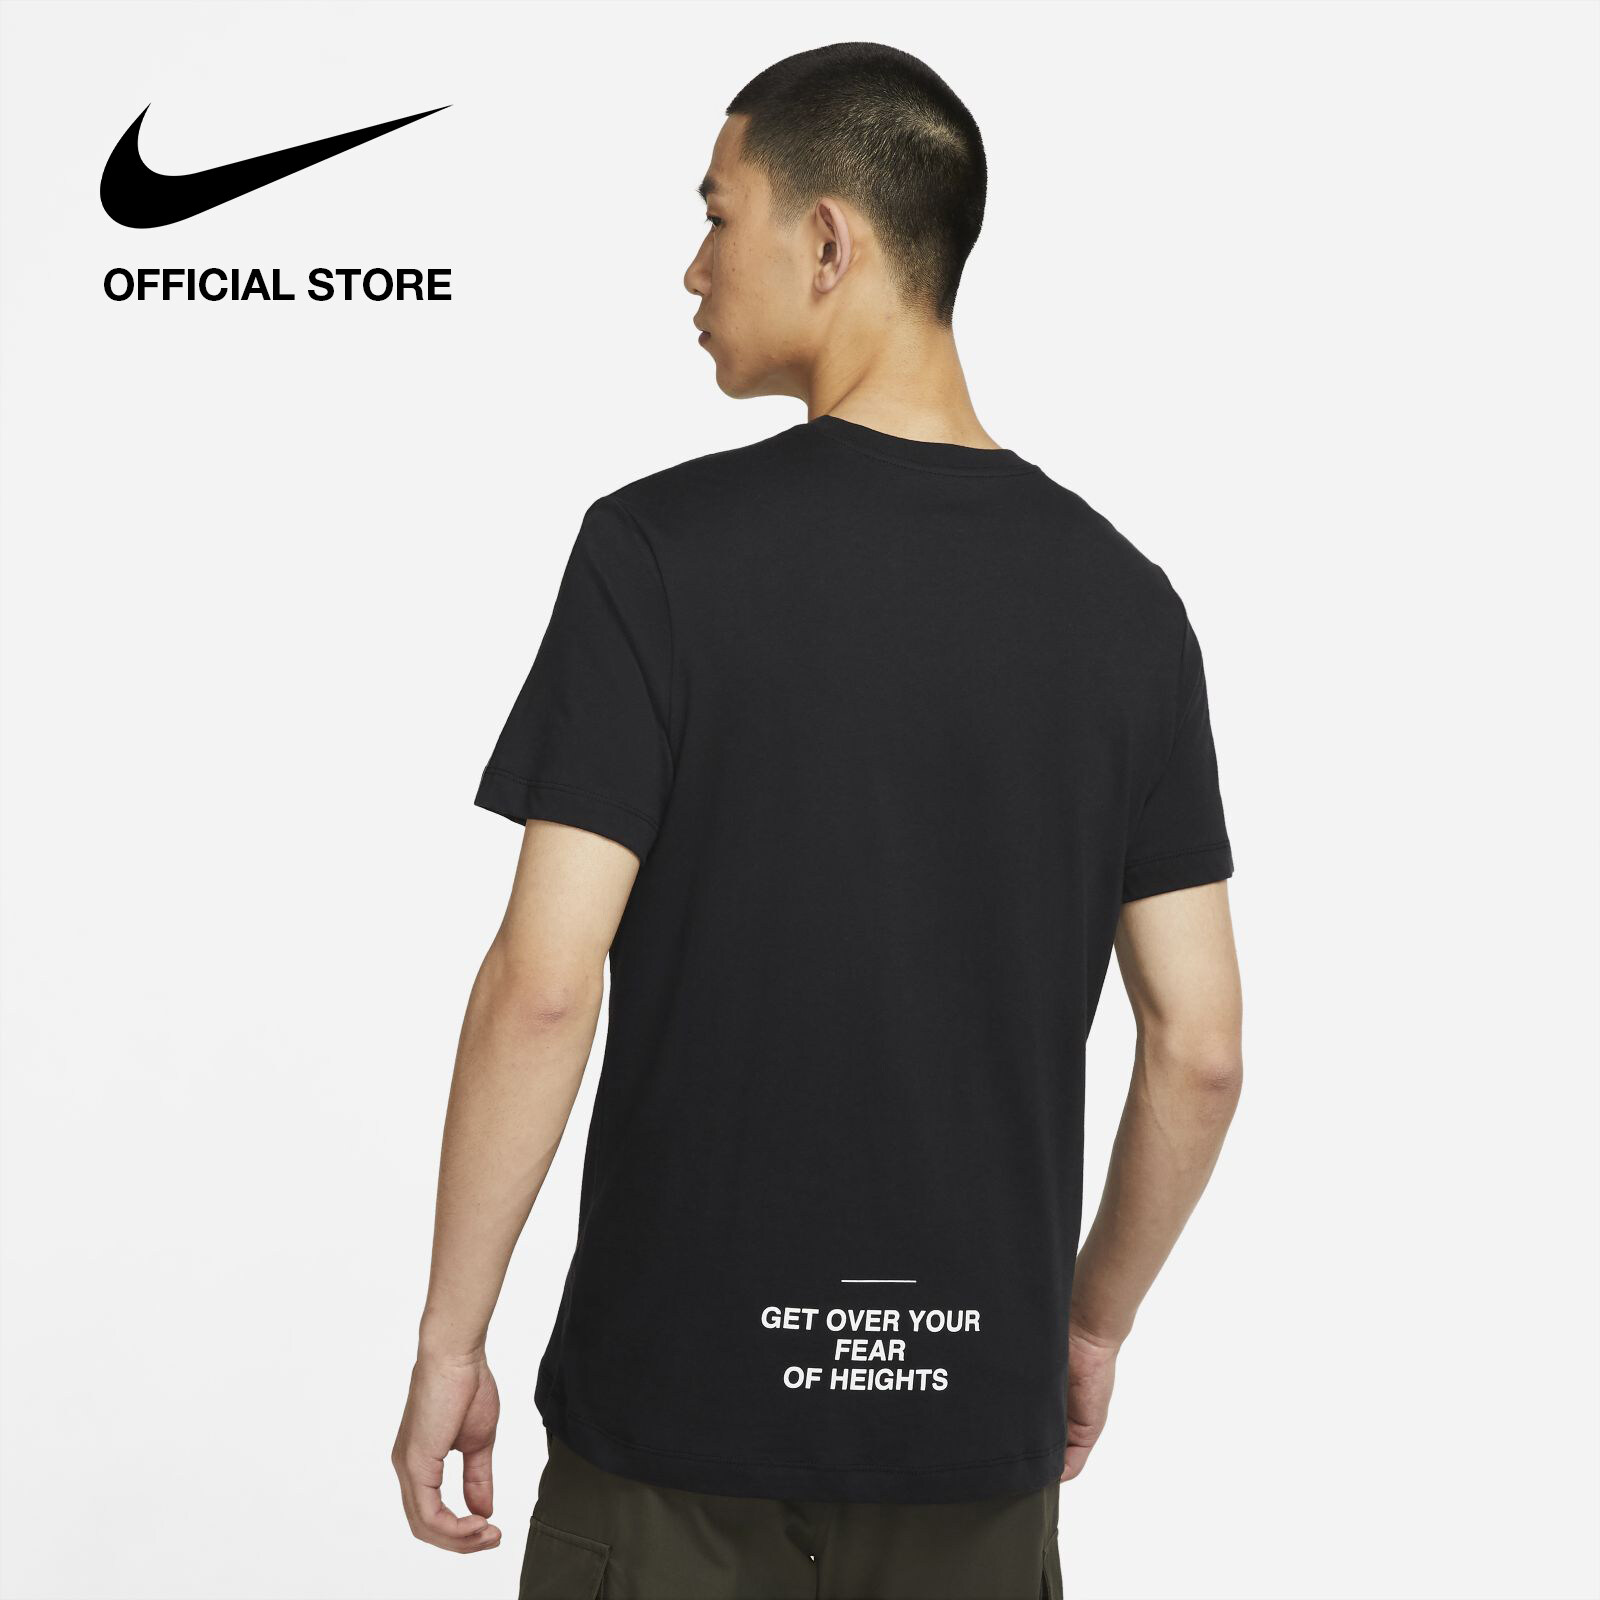 Nike Men's Sportswear T-Shirt - Black ไนกี้ เสื้อยืดผู้ชาย - สีดำ